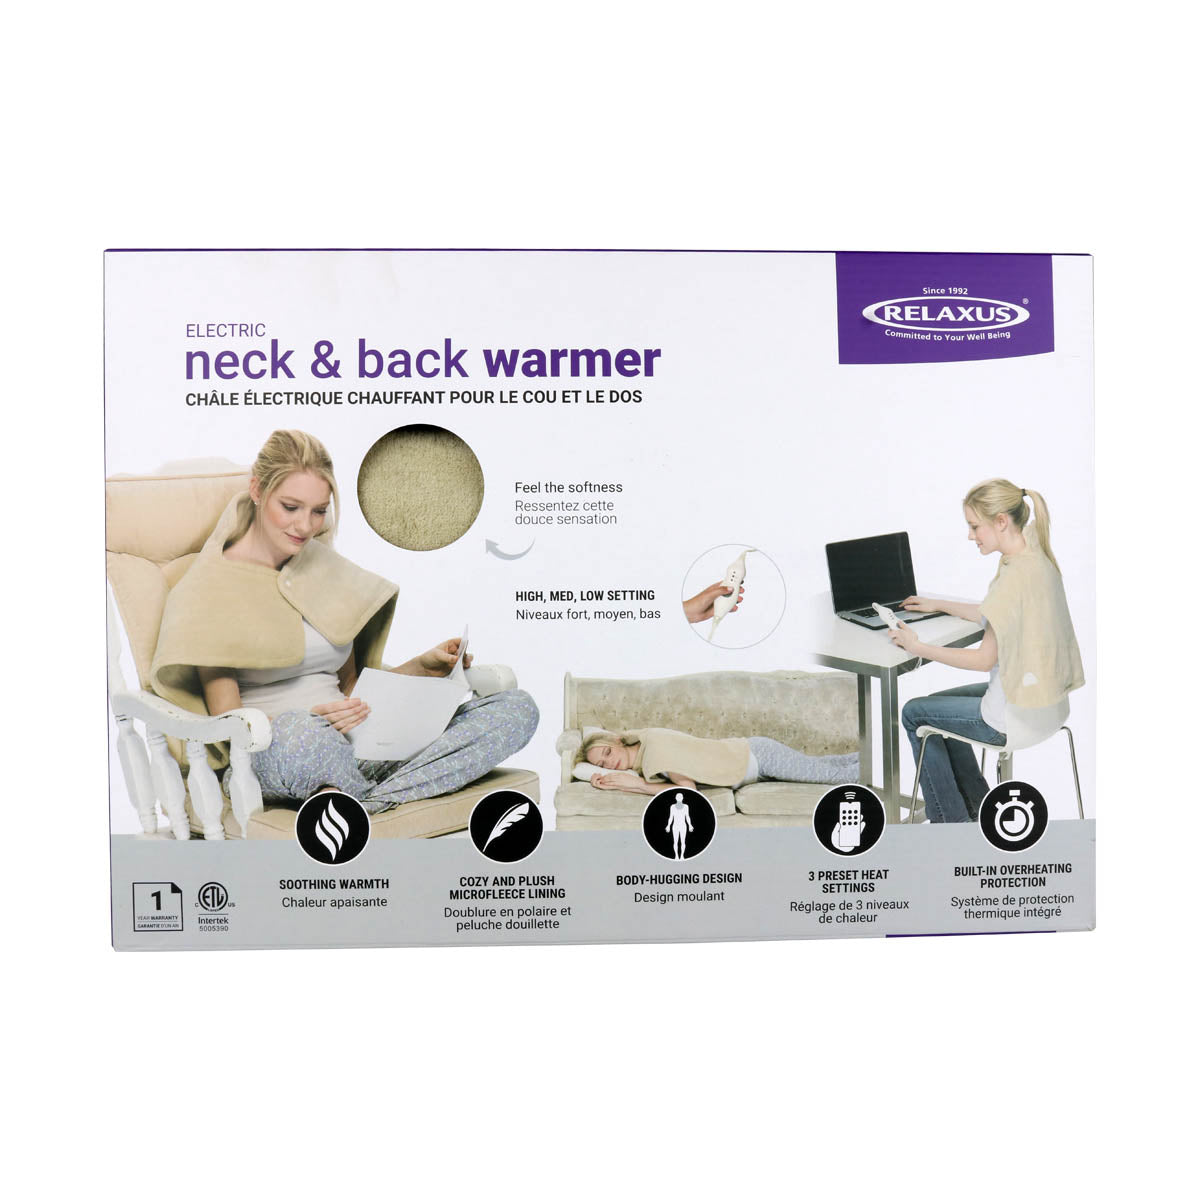 Electric Neck & Back Warmer box